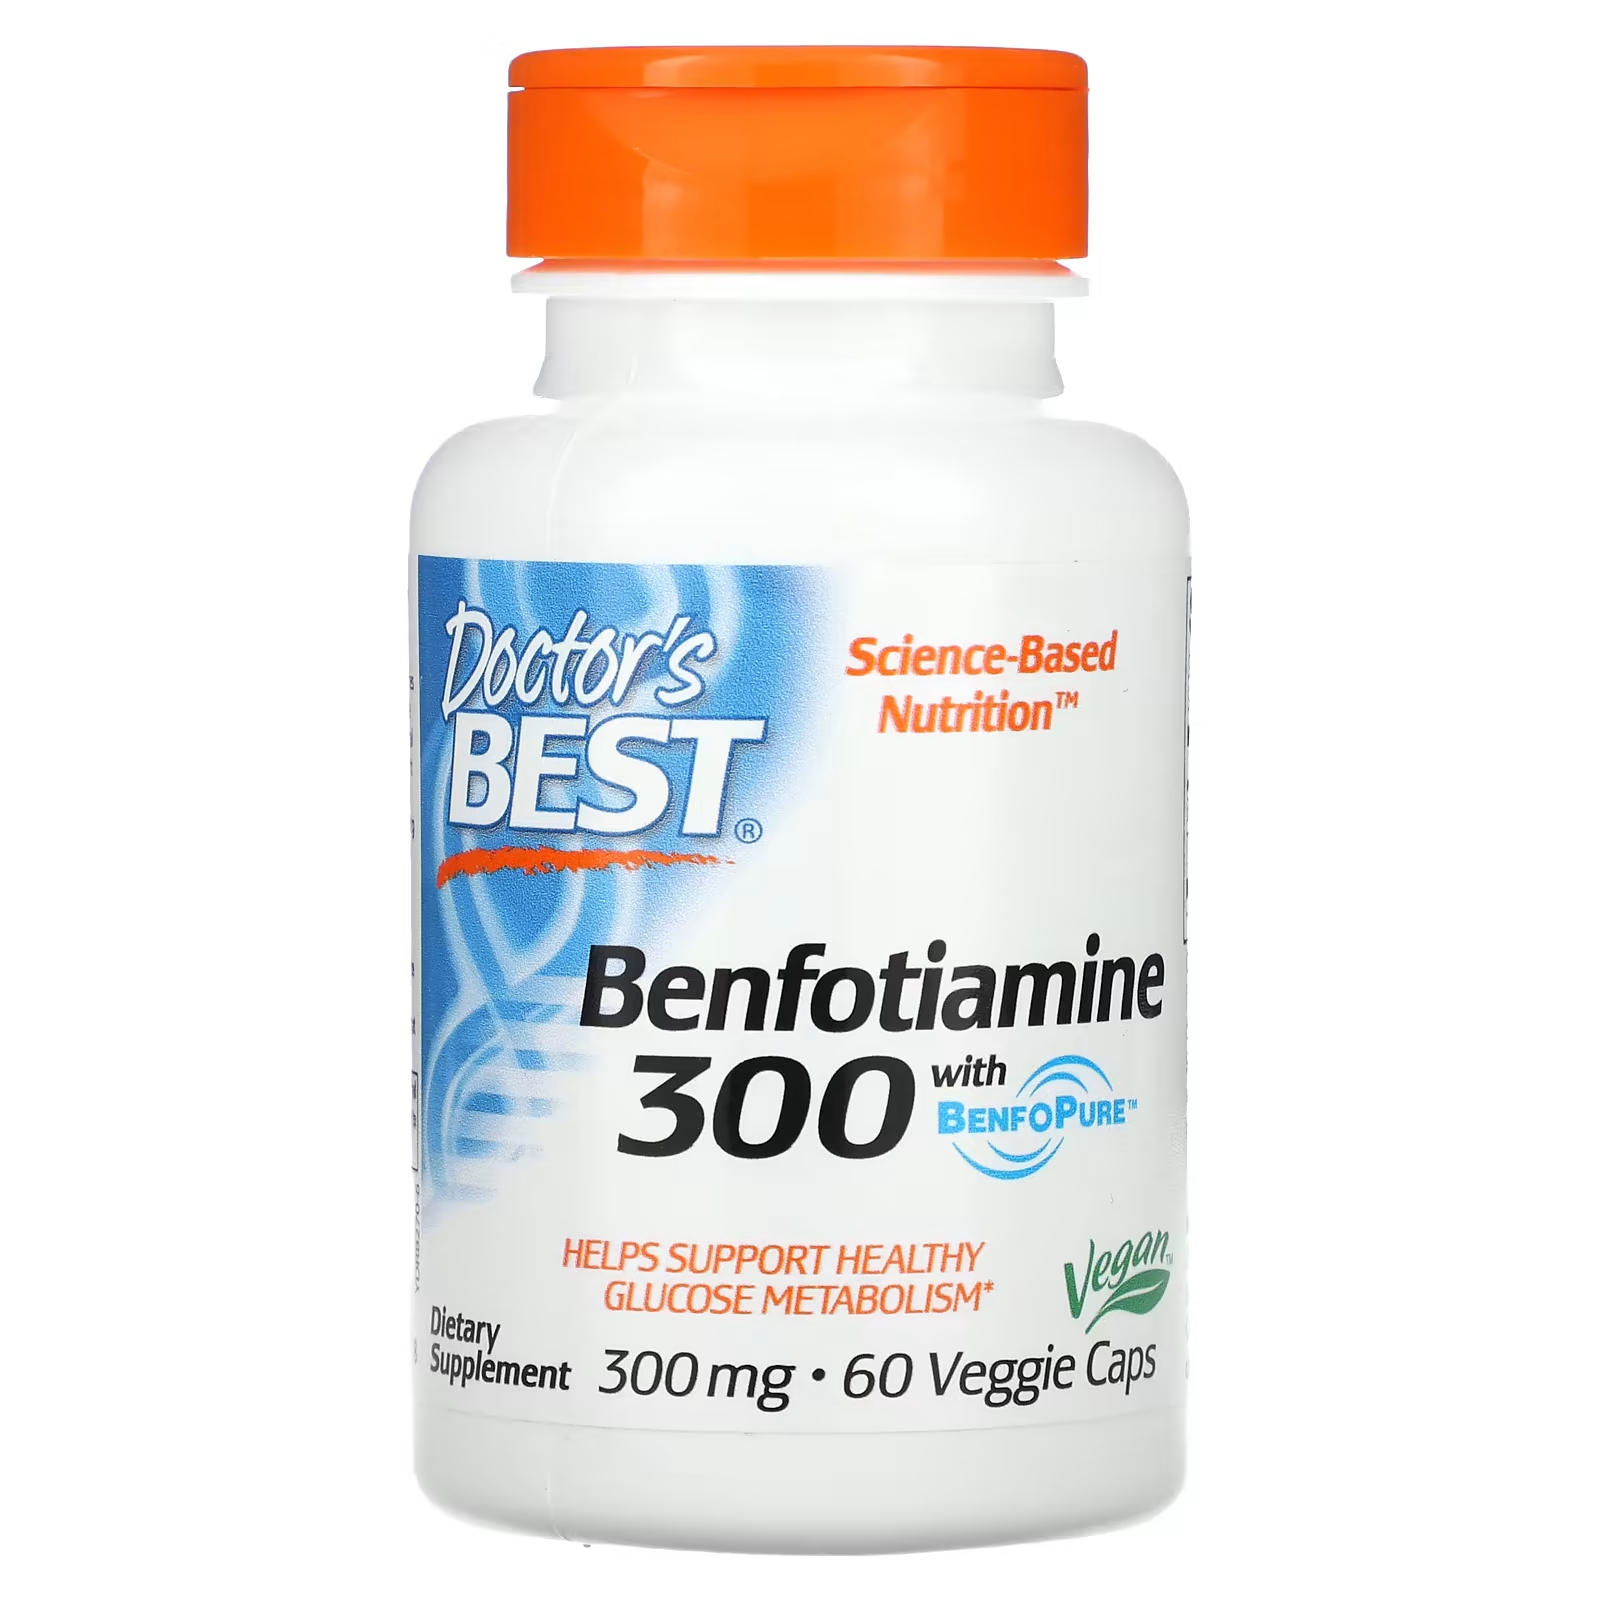 Бенфотиамин 300 Doctor's Best с BenfoPure, 300 мг